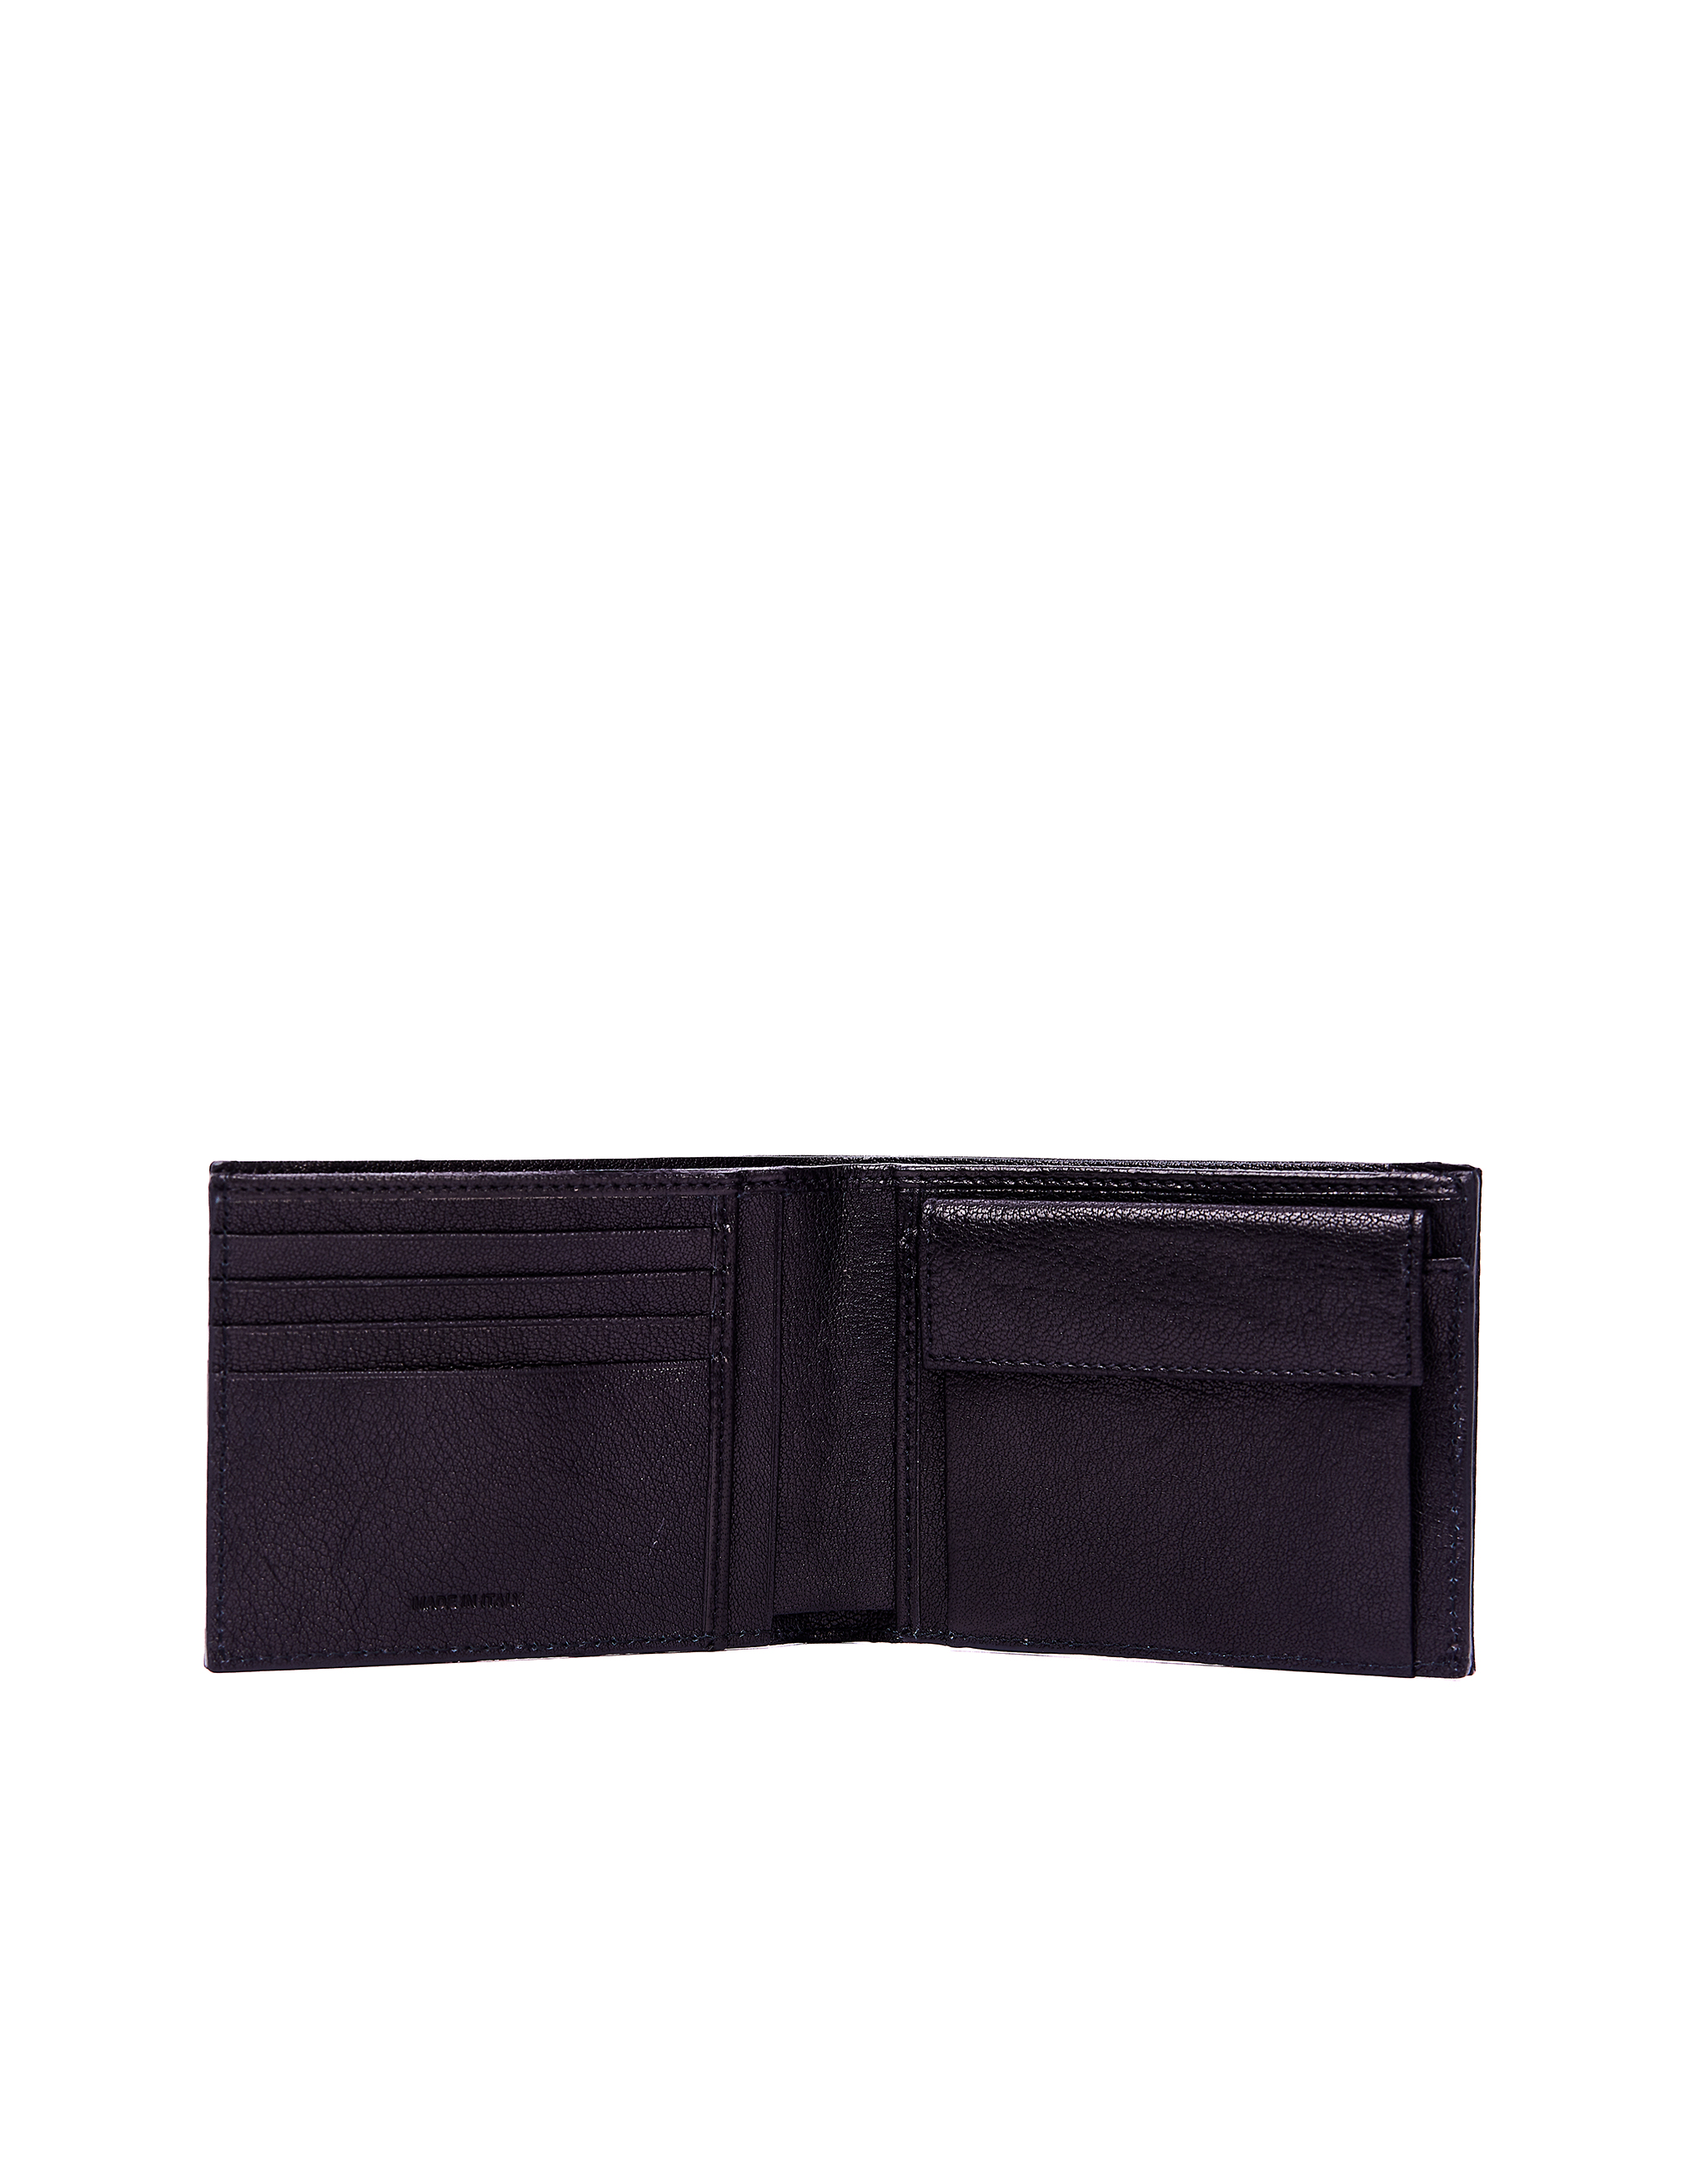 Черный кожаный кошелек Pocket Ugo Cacciatori WL141/VRN, размер One Size WL141/VRN - фото 2